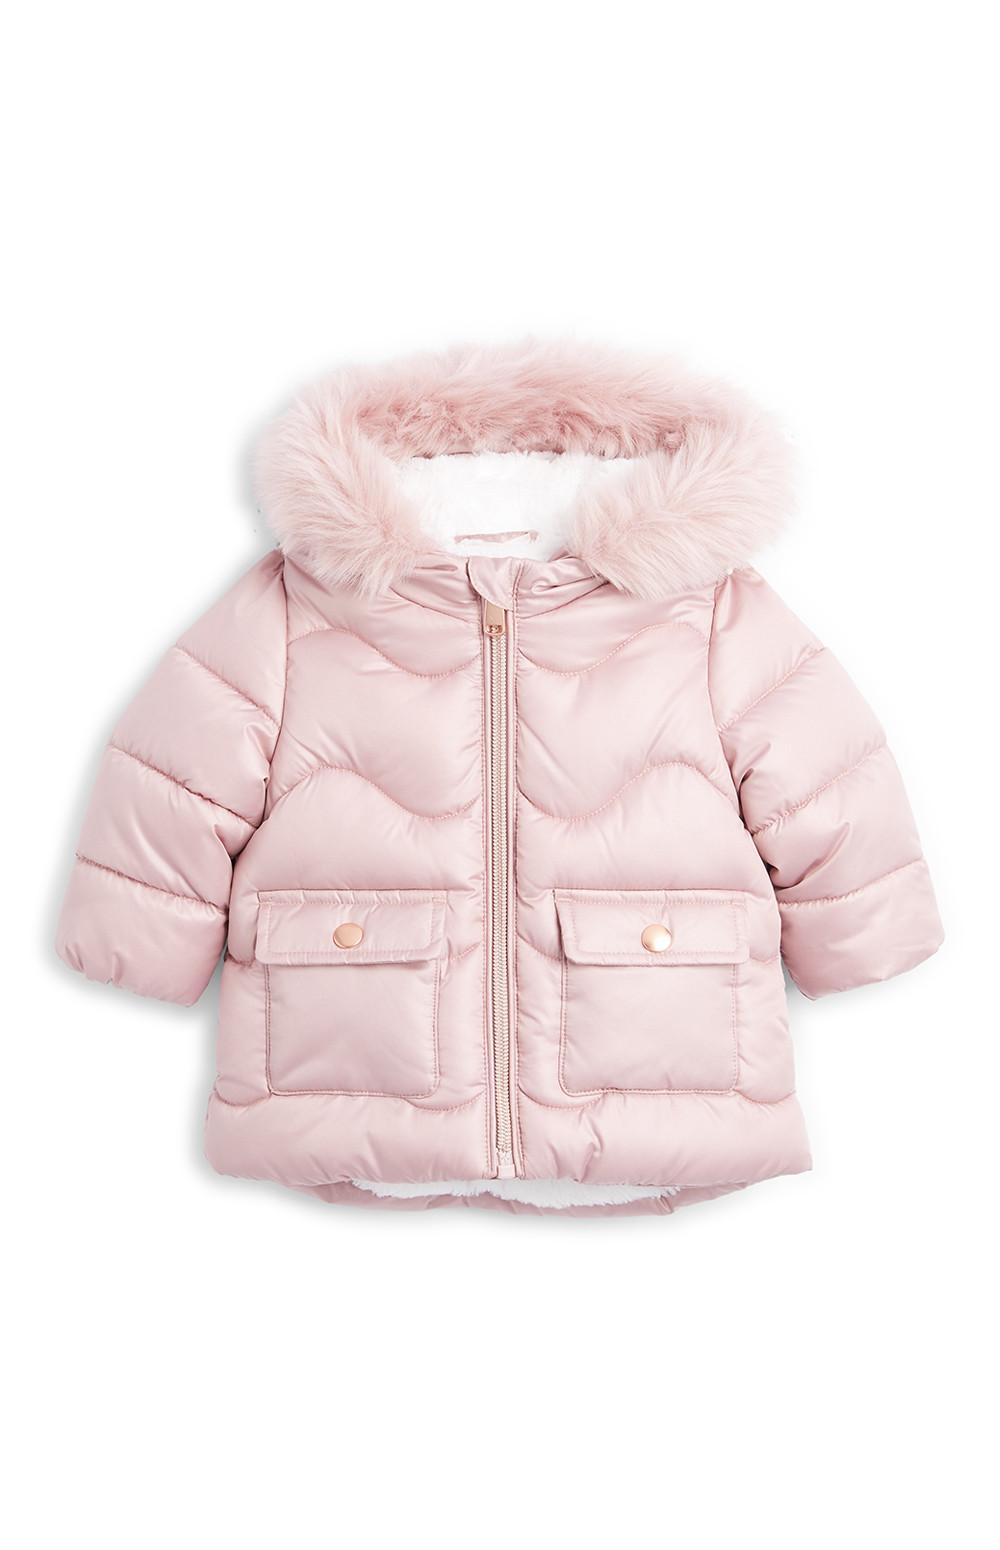 primark baby girl winter clothes